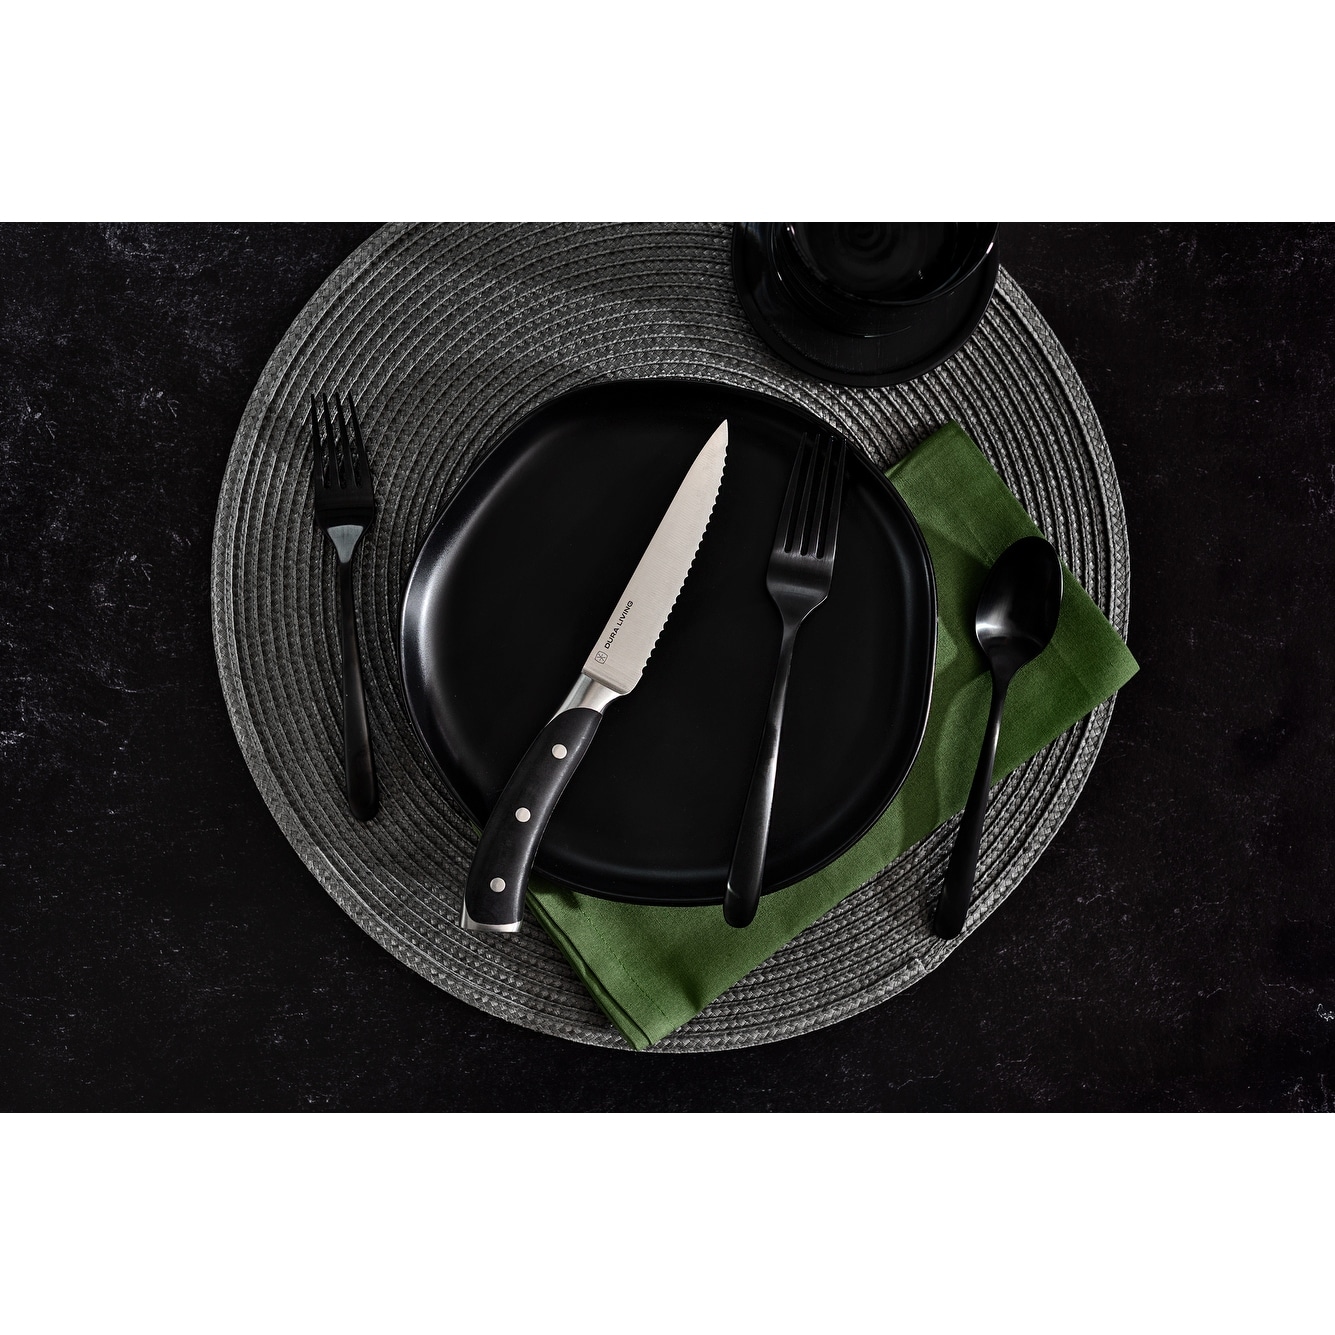 https://ak1.ostkcdn.com/images/products/is/images/direct/0923ad3c90c8849d7792490ca79b25eeddc2d896/Dura-Living-Elite-Steak-Knife-Set-of-8---German-Stainless-Steel-Serrated-Blades%2C-Black.jpg